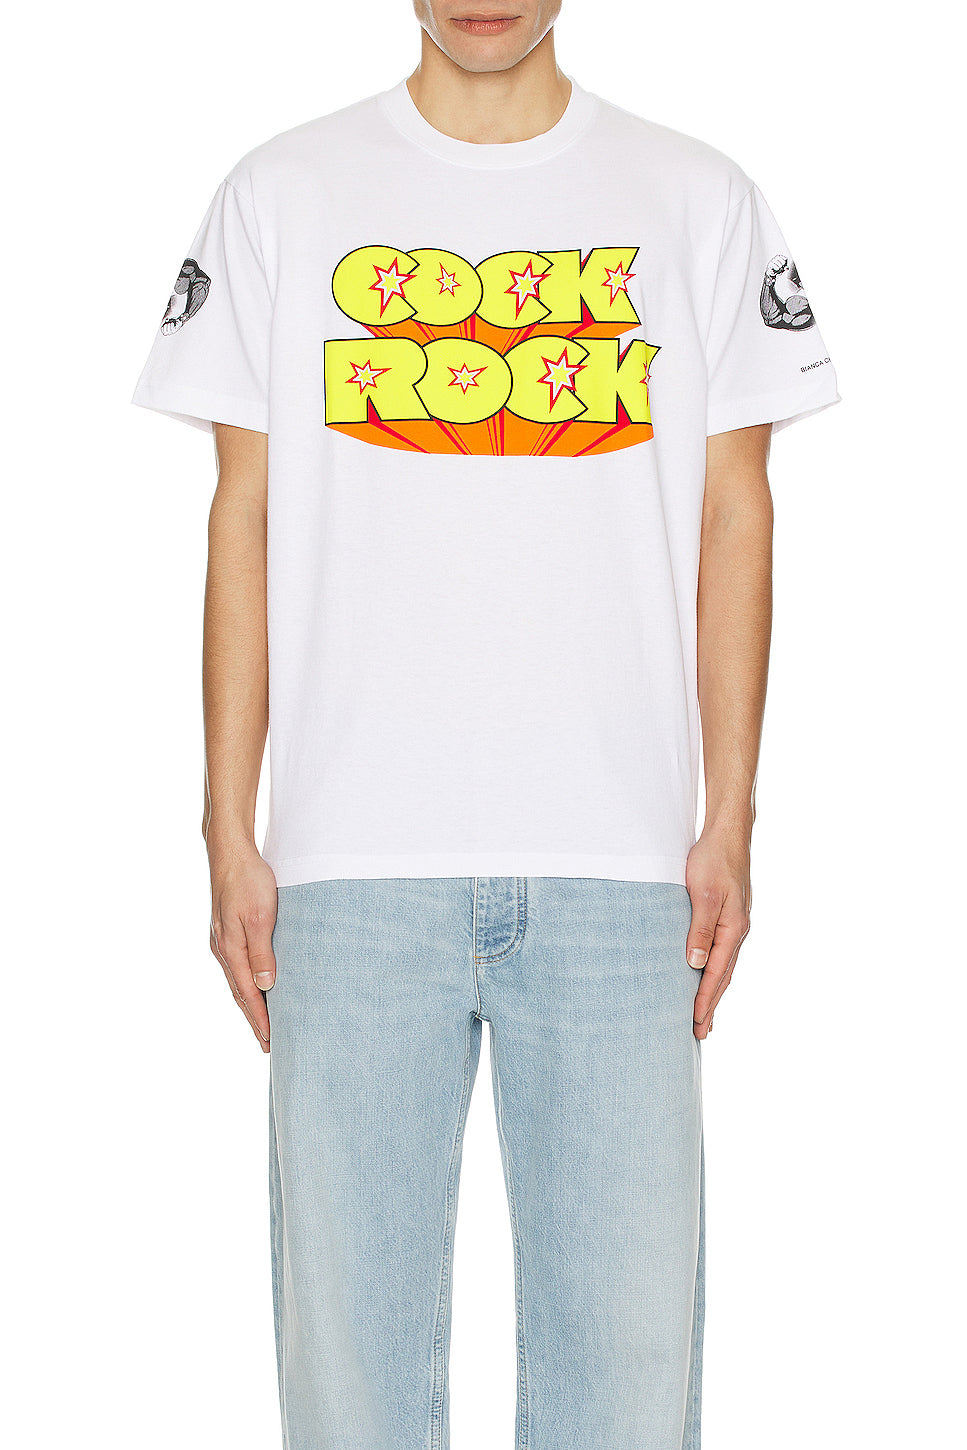 Glam Rock T-Shirt